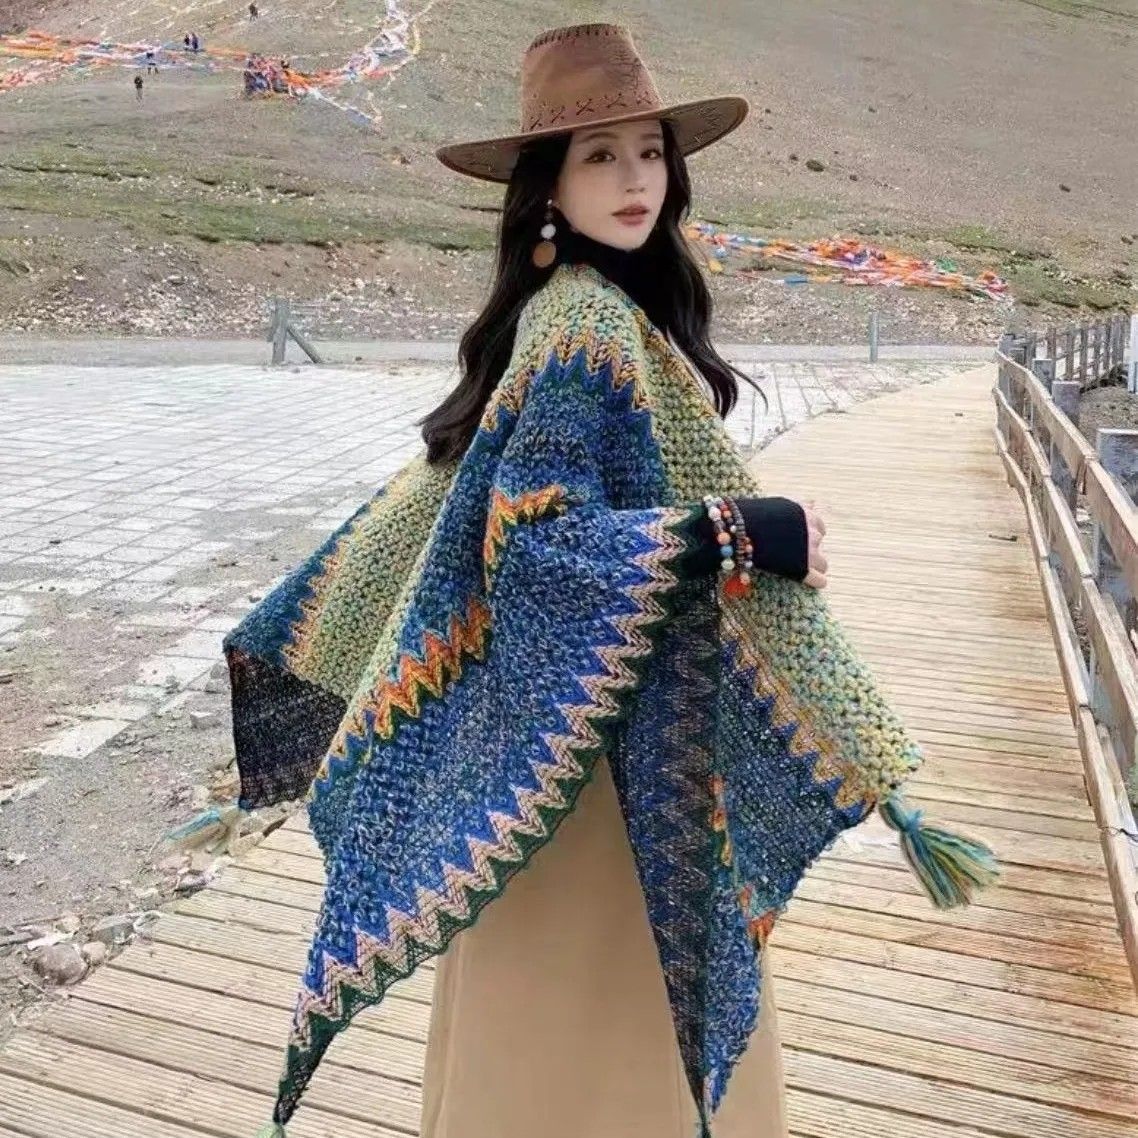 yunnan lijiang shawl liu yifei same style dali travel network red ethnic style shawl cape scarf outer cloak